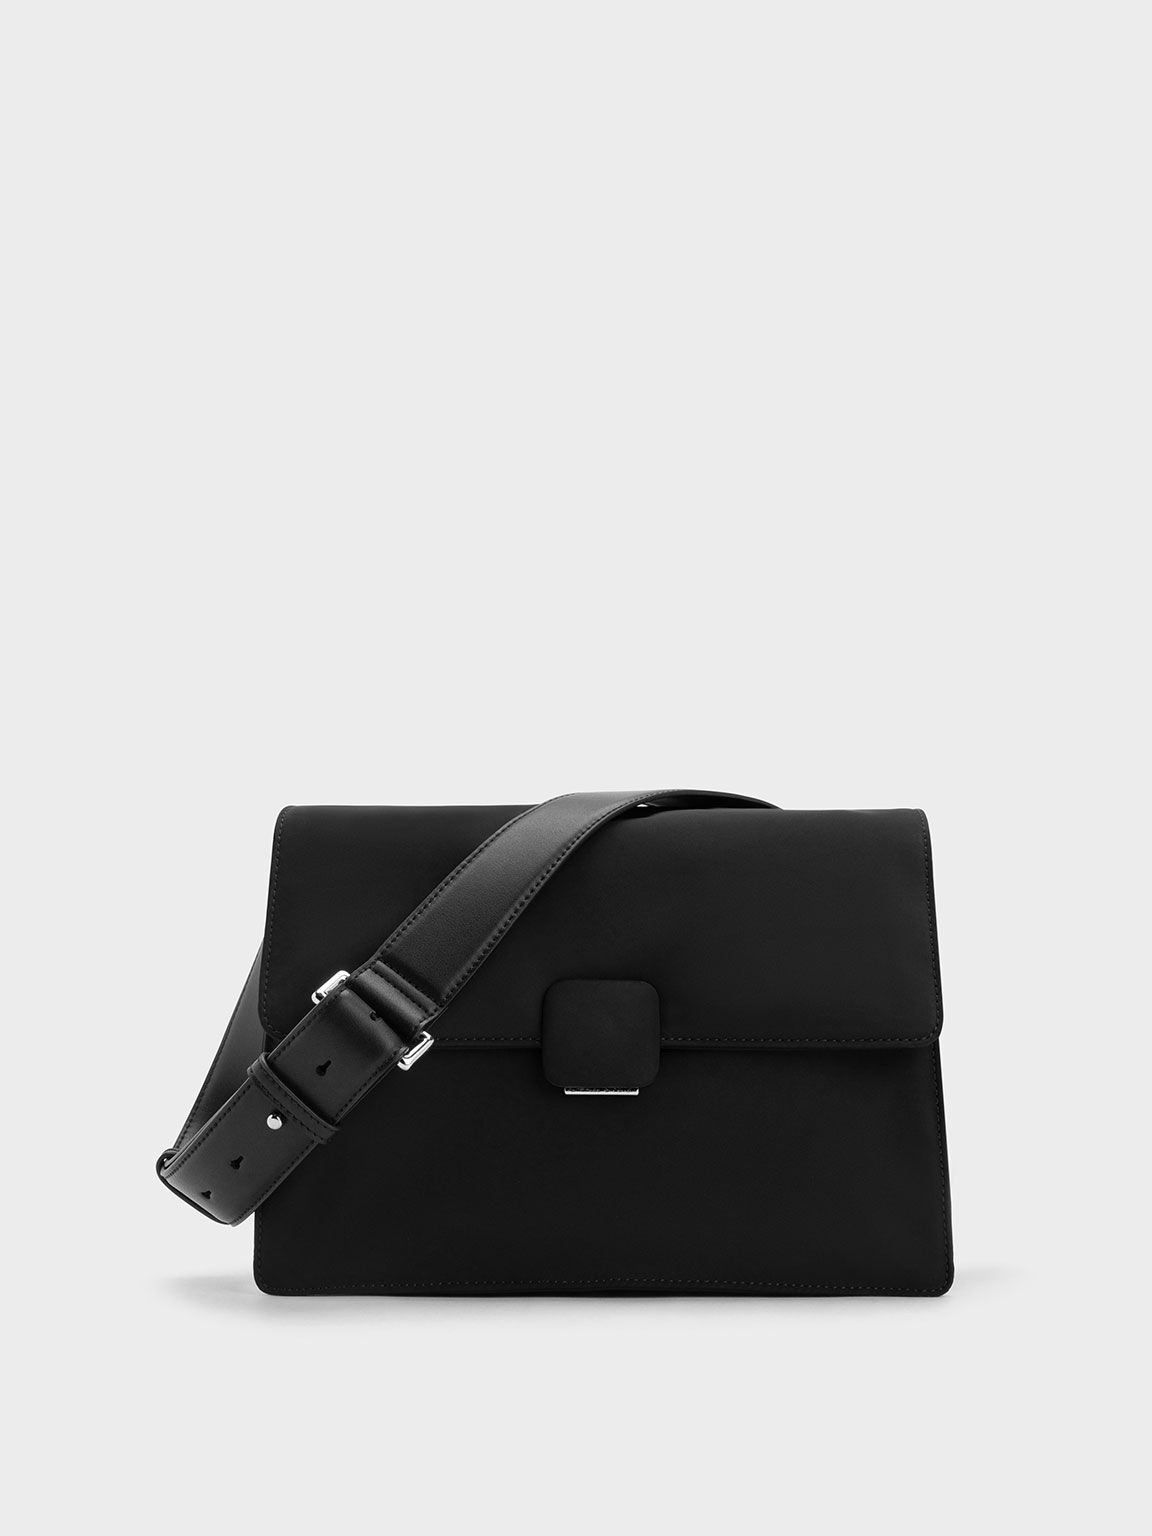 Shoulder Bag Thick Chain Crossbody Handbag 25*8*16 CM Synthetic Leather  Purse